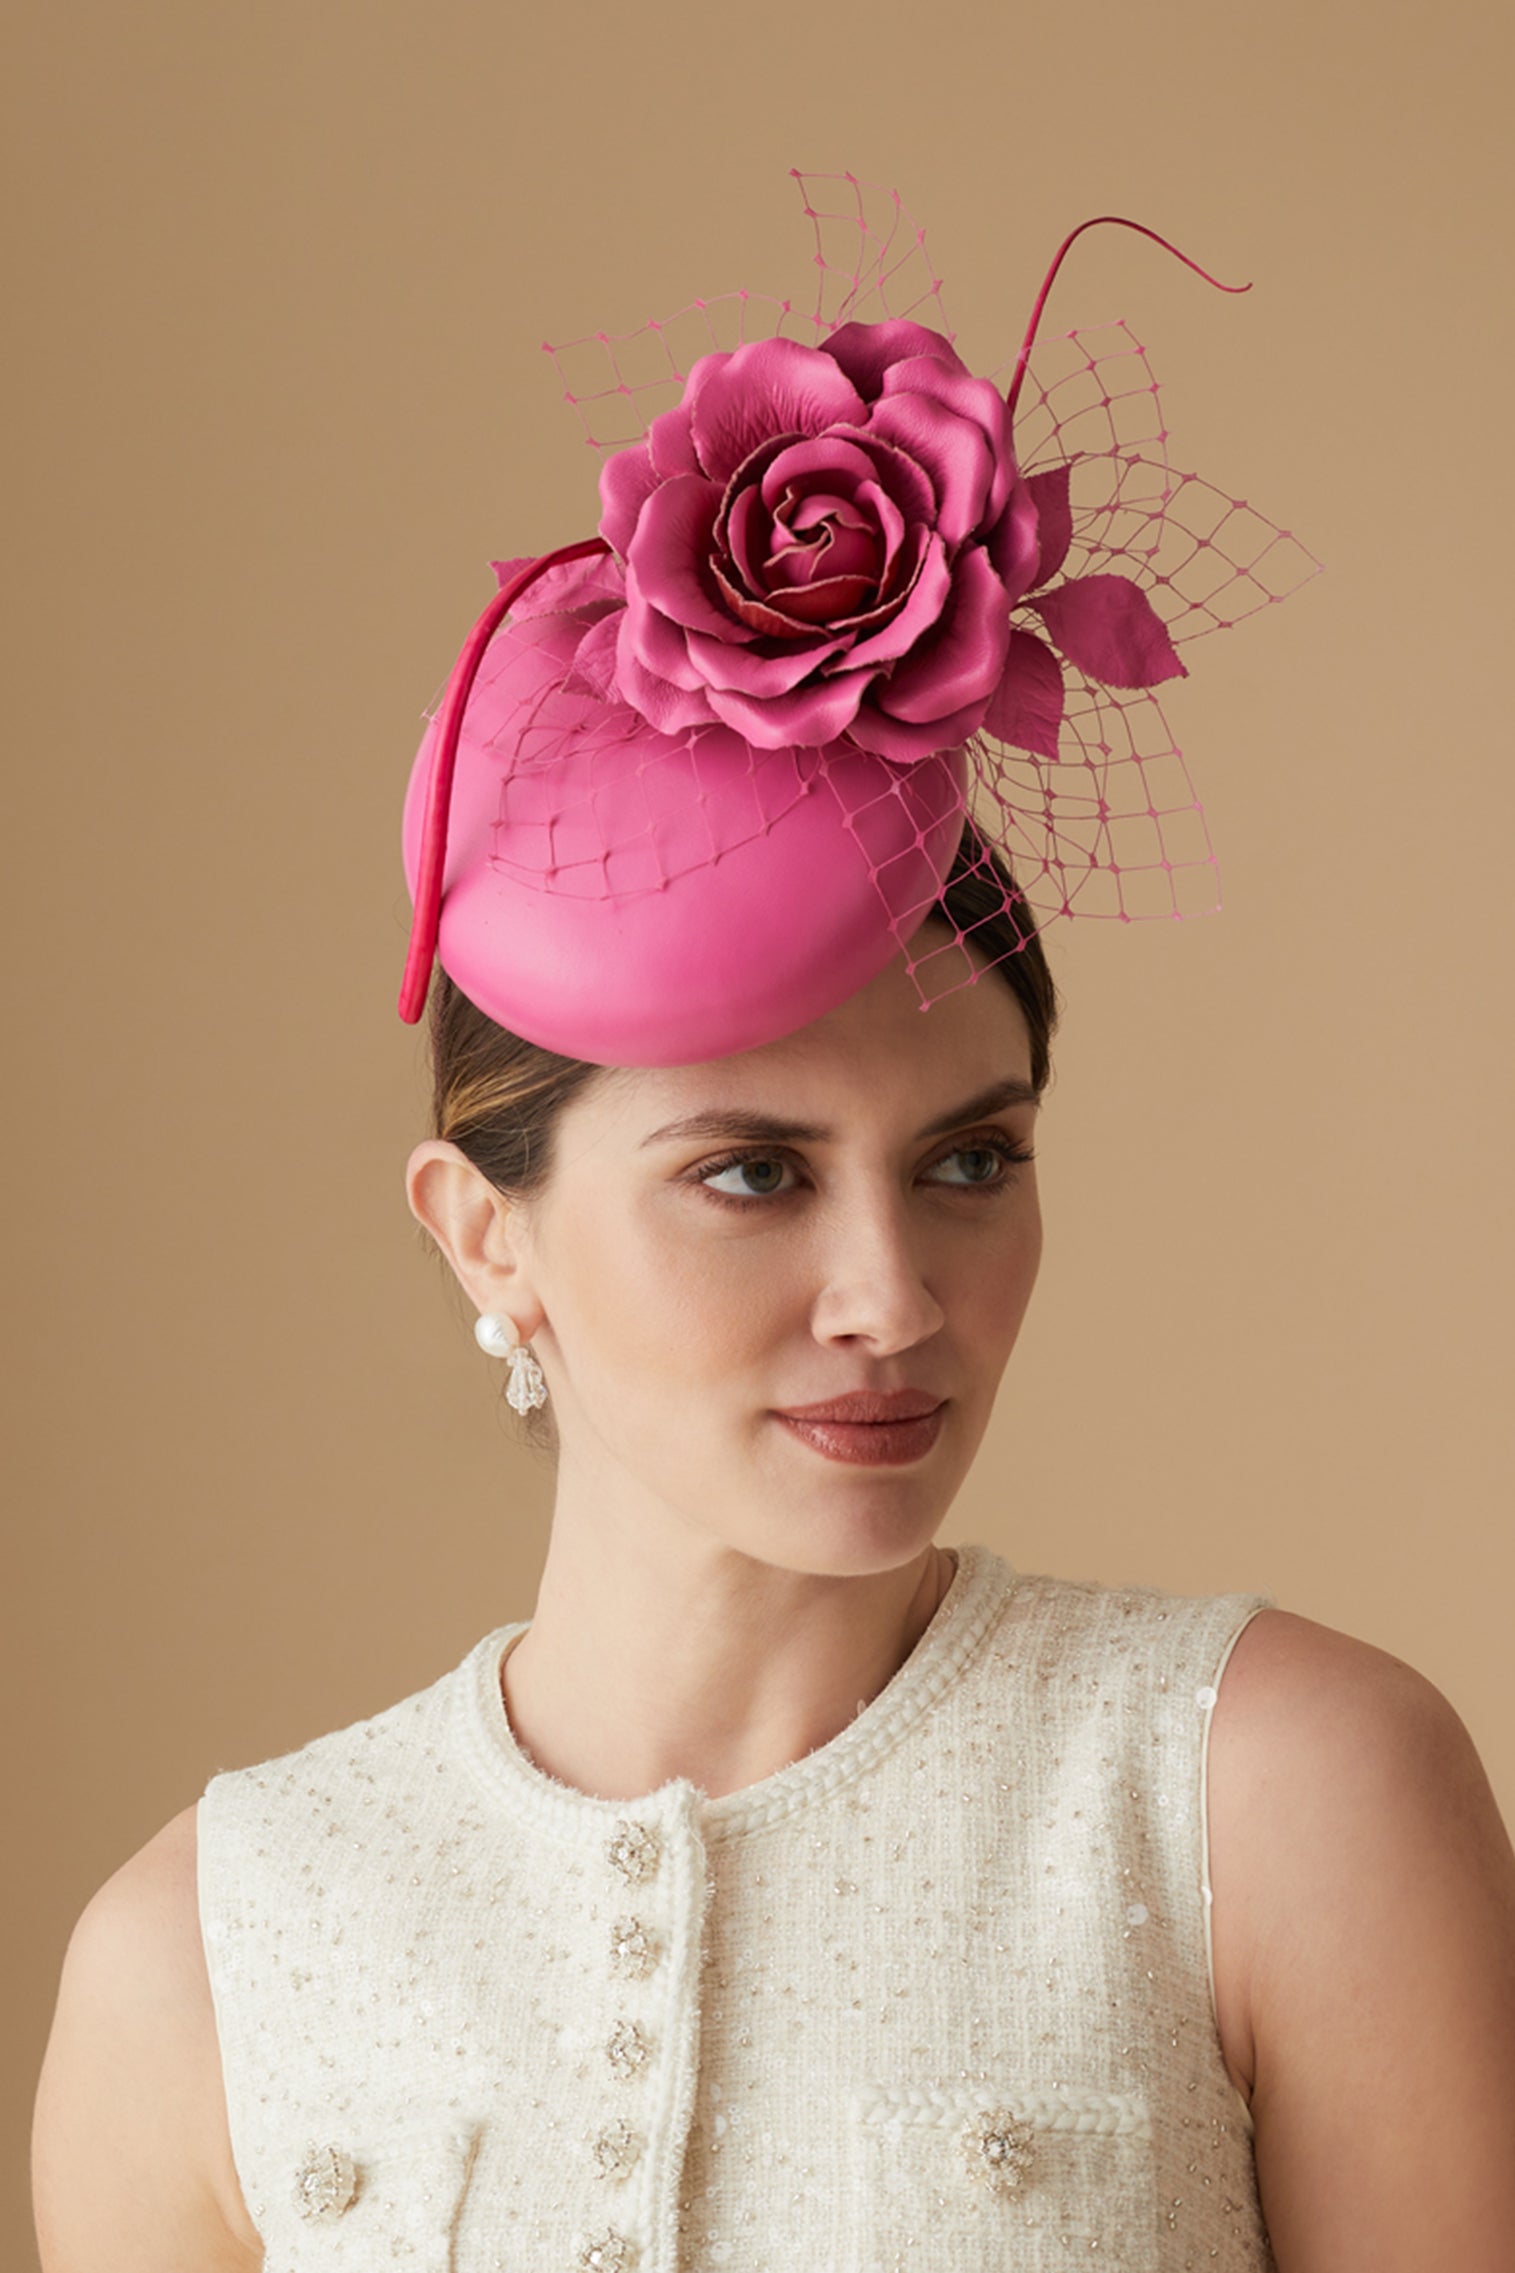 Rose Bud Pink Leather Percher Hat - Royal Ascot Hats - Lock & Co. Hatters London UK